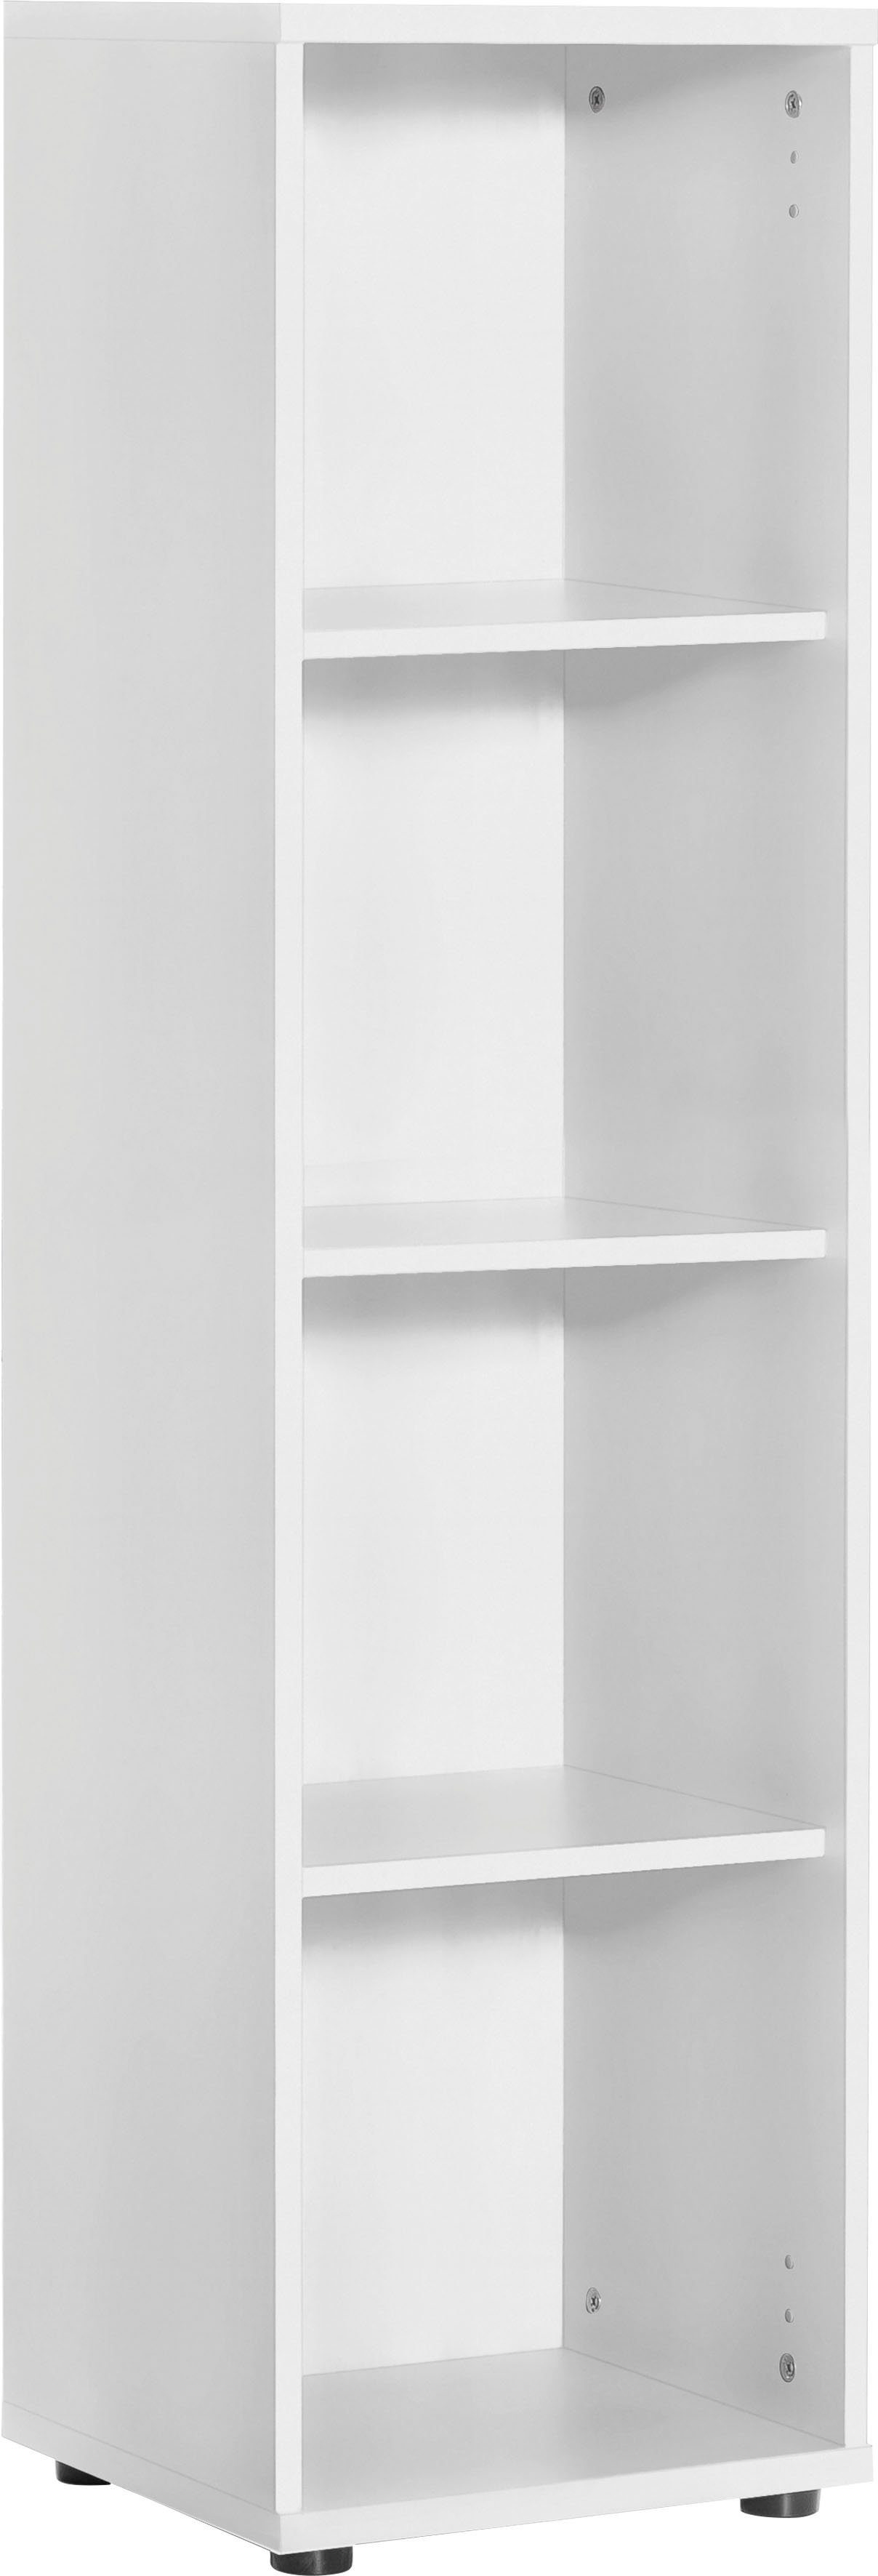 Schildmeyer Aktenregal Serie 200, Maße (B/T/H) 40/34/147 cm